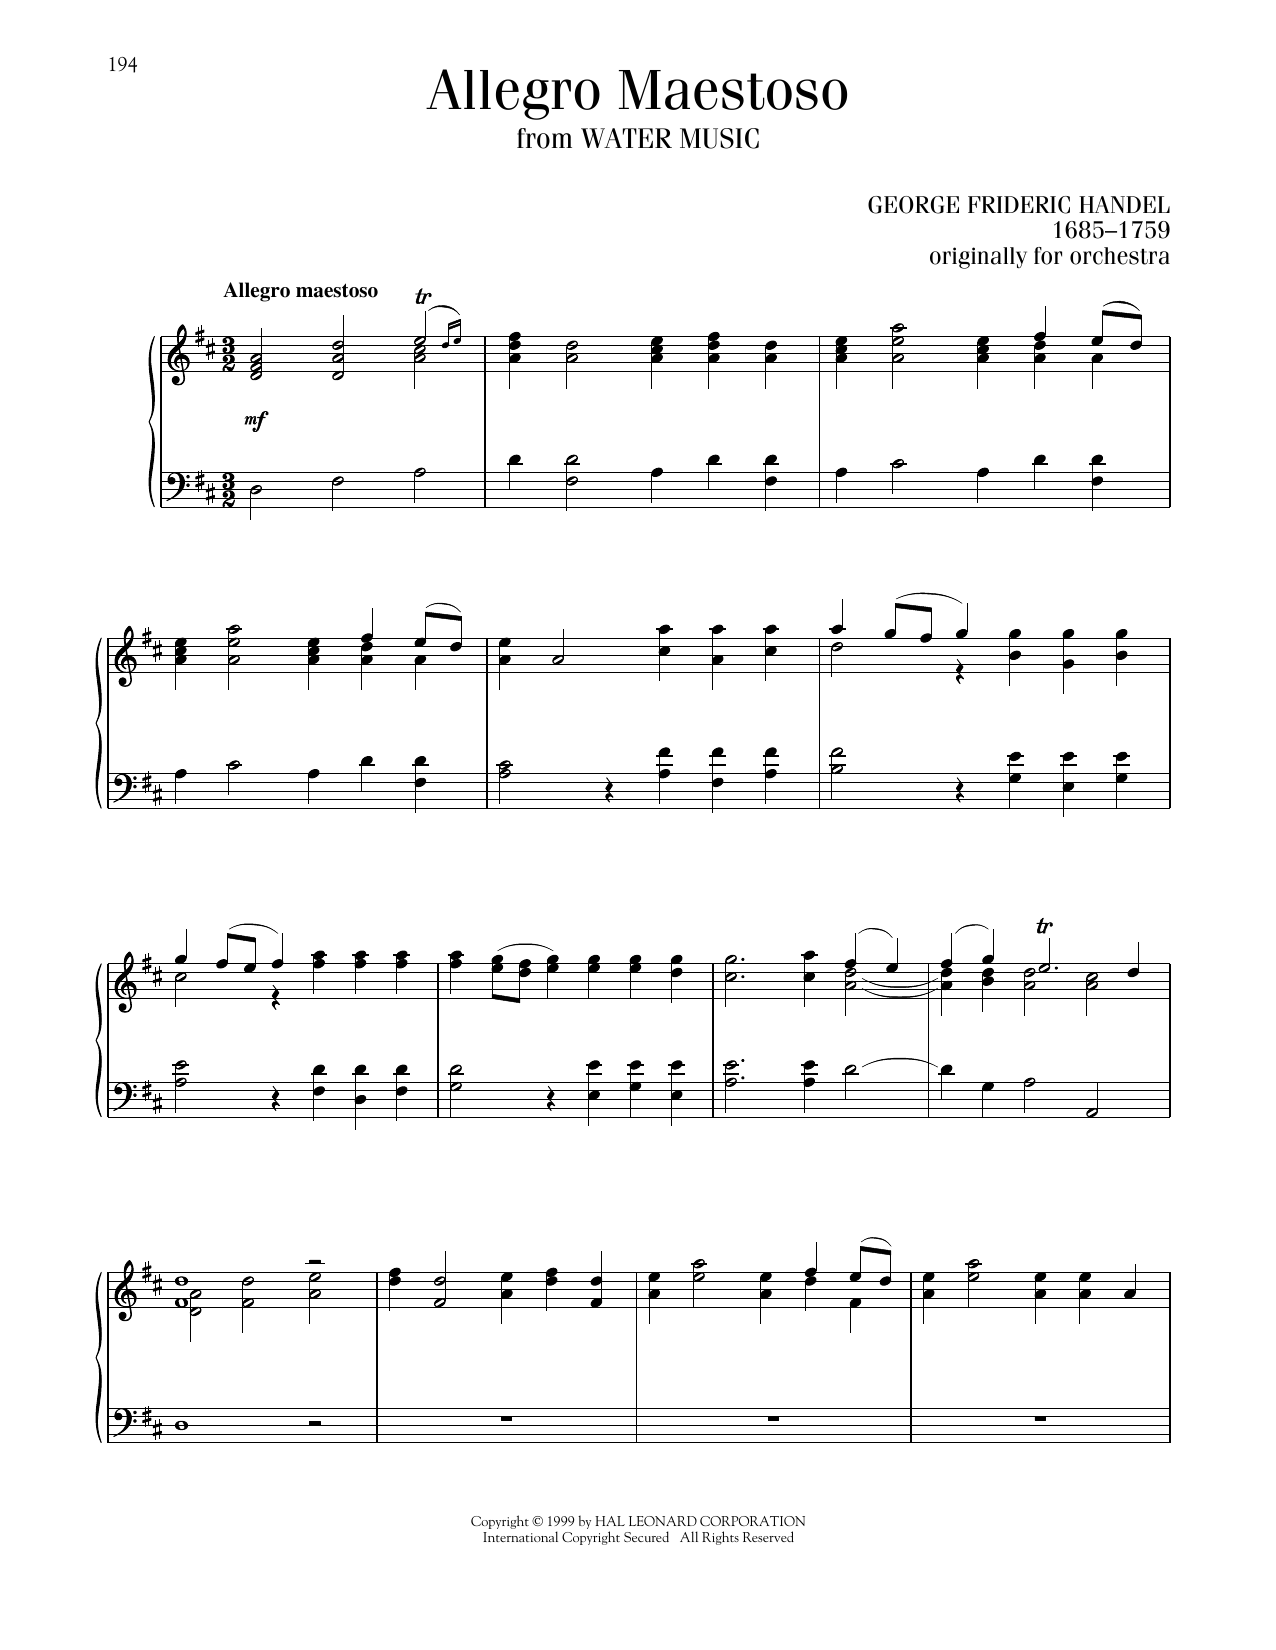 George Frideric Handel Allegro Maestoso sheet music notes printable PDF score